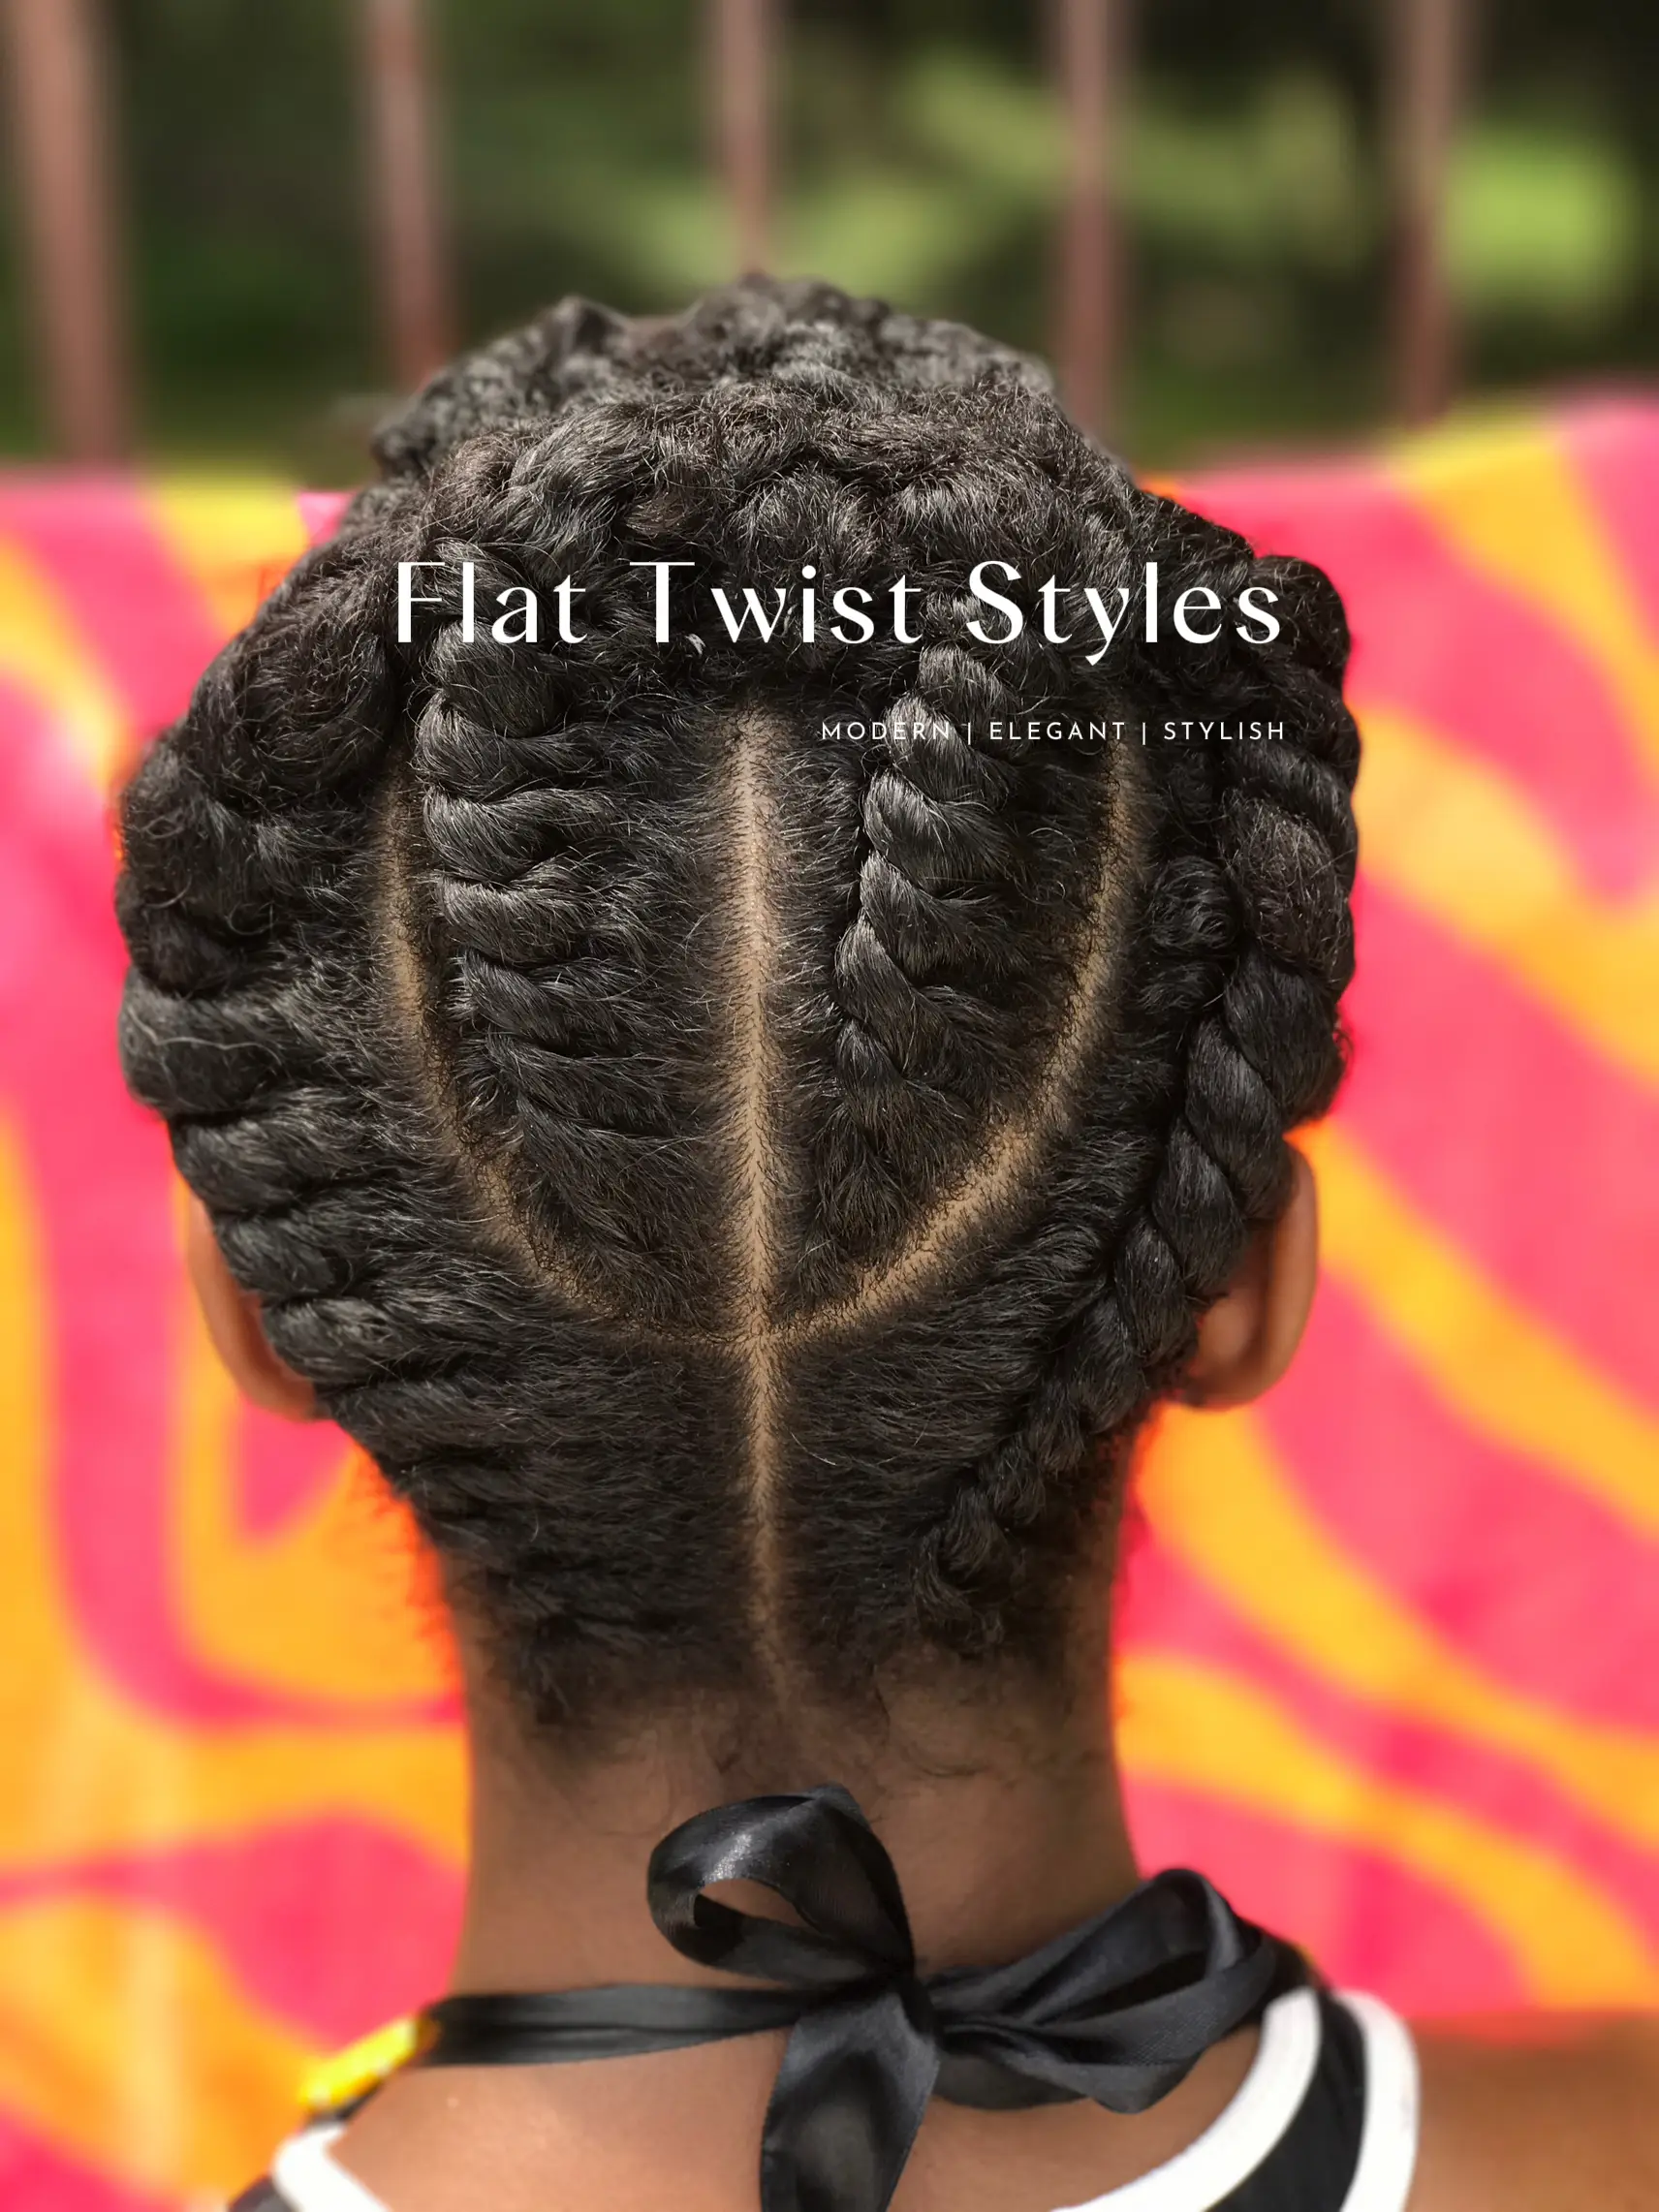 Chocolate Goddess Braiding Hairstyle For Black Women & Girls: 115 Awesome  Hair Braids Design, Lemon Cornrows, Box-Braids, Buns, Bantu, Protective  Wool